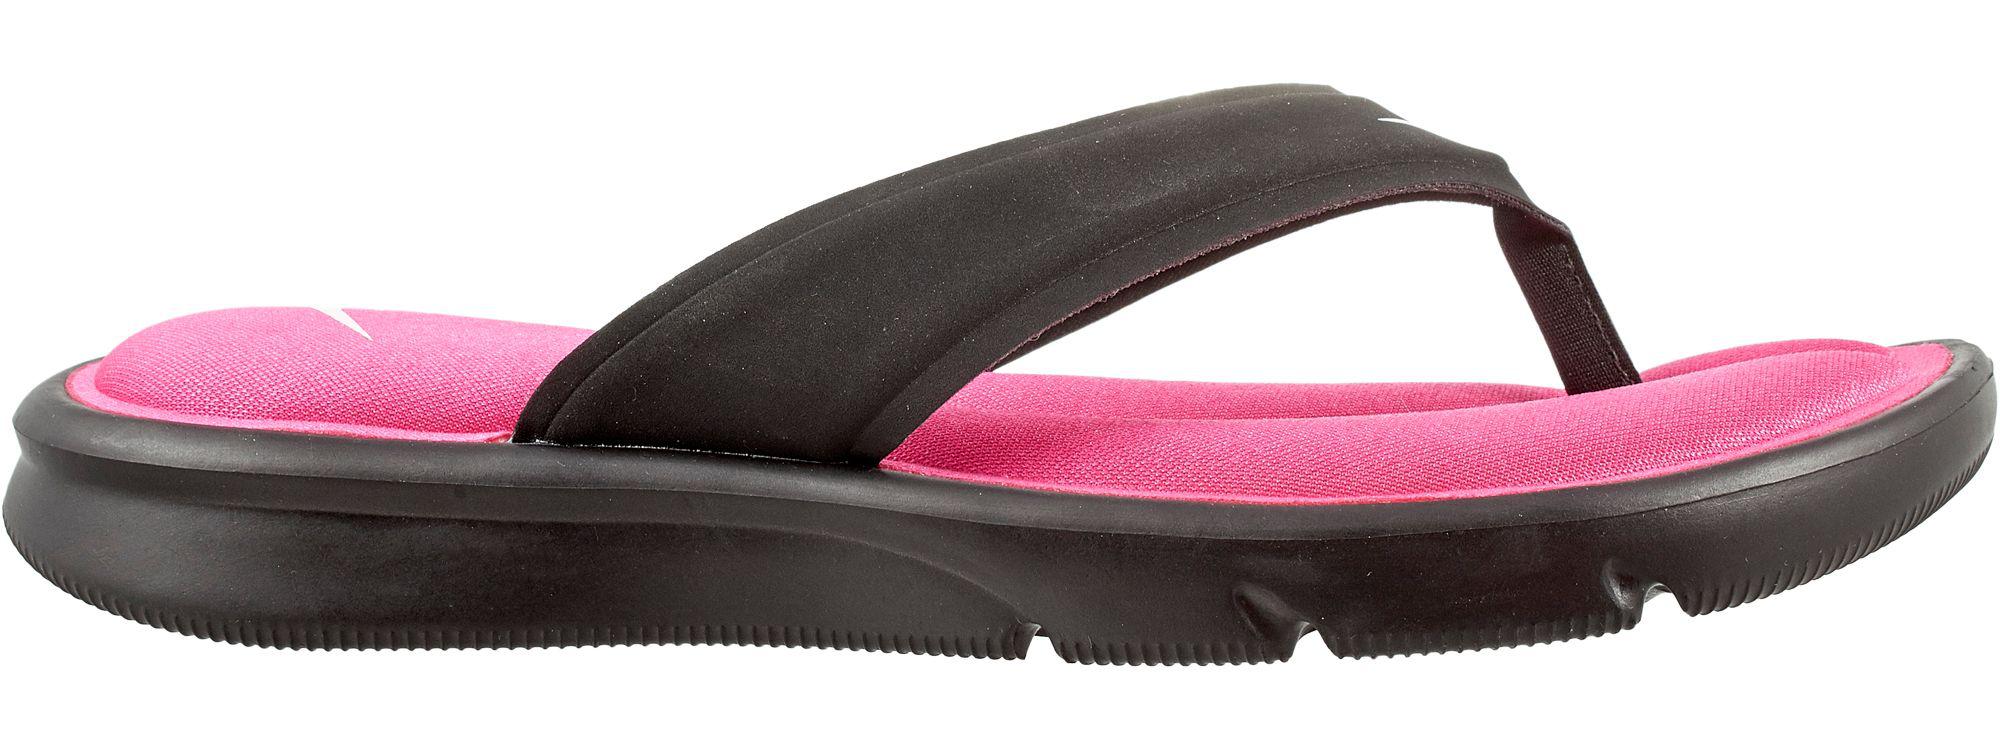 nike women's ultra comfort thong sandal